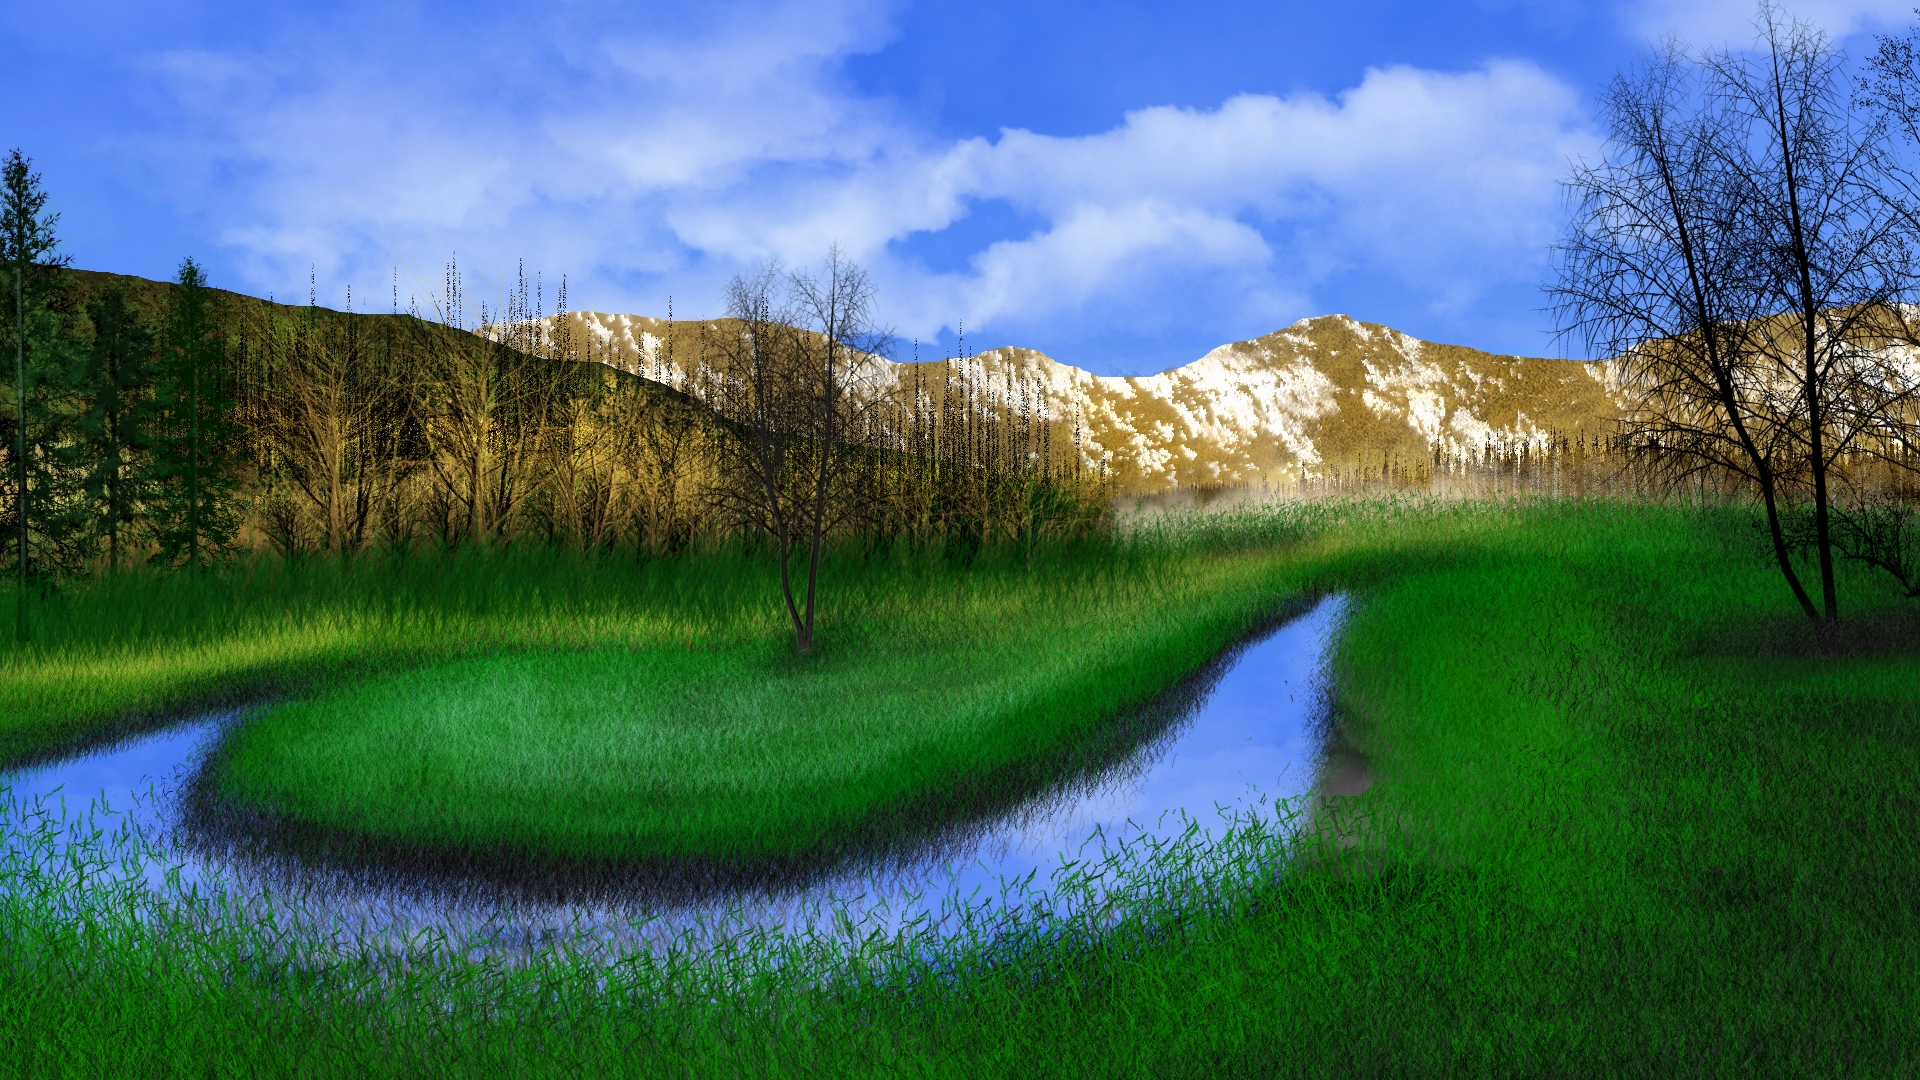 General 1920x1080 digital painting digital art nature landscape creeks water clouds sky mountains trees